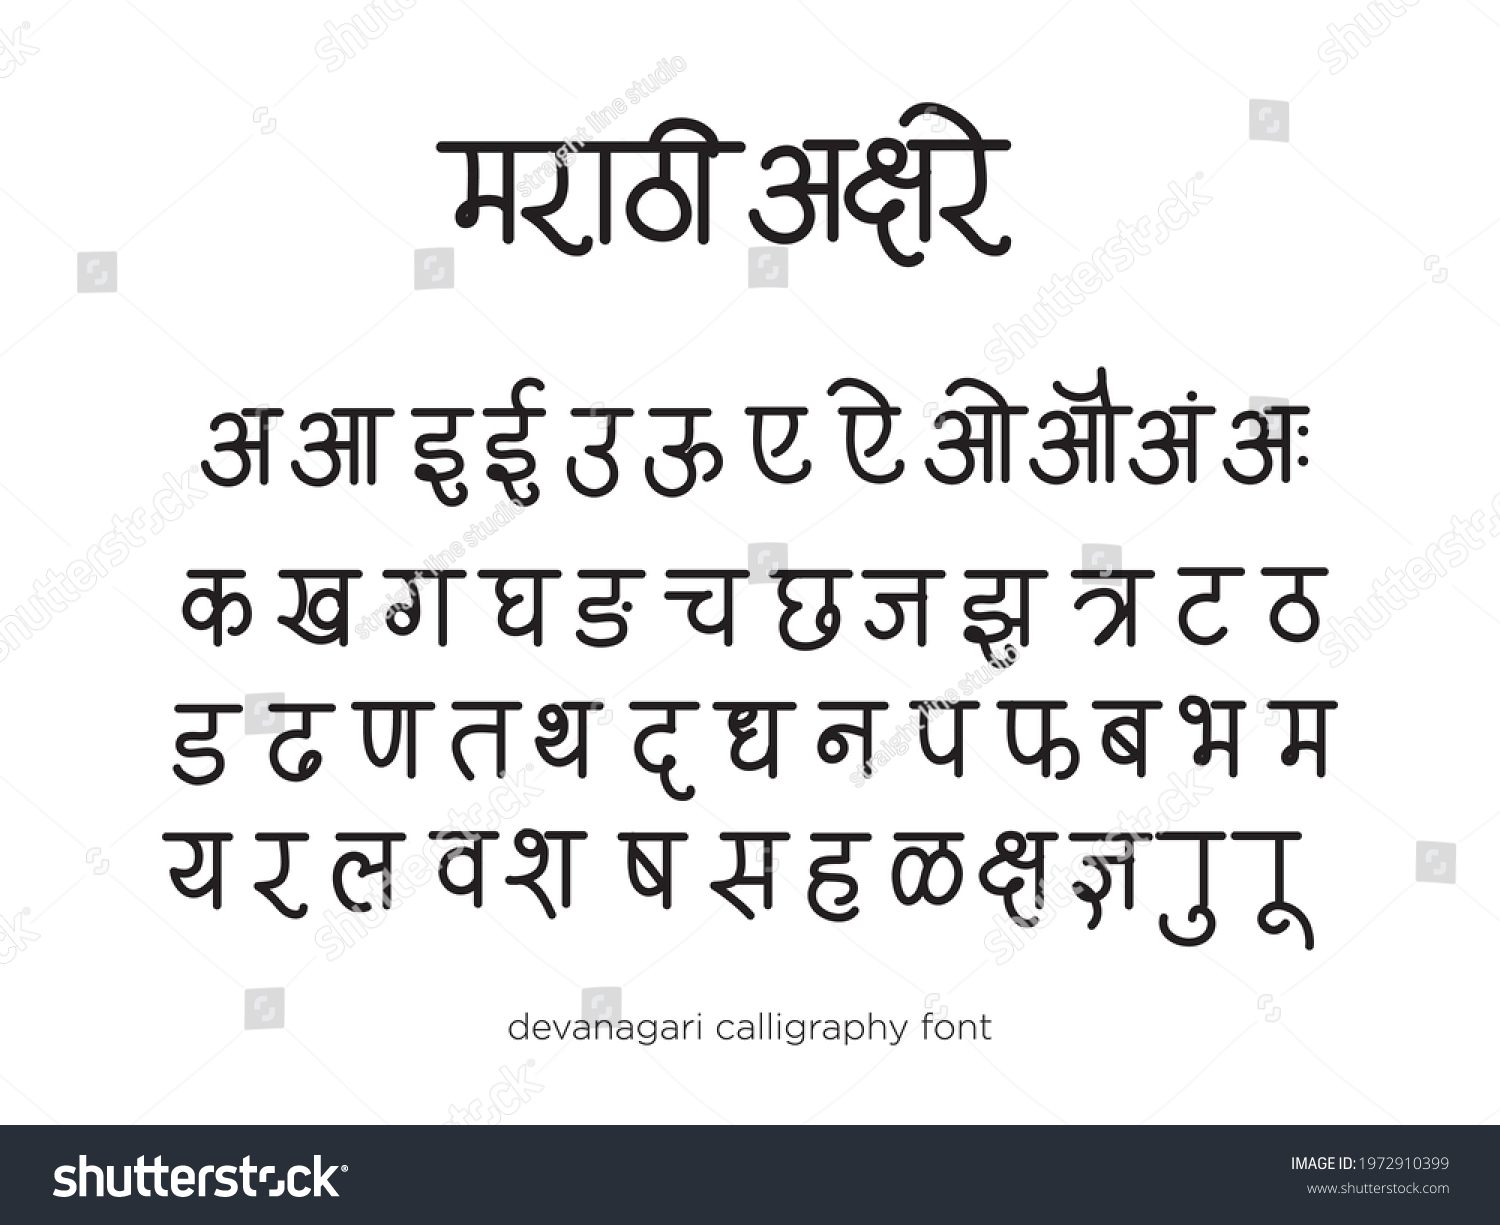 SVG of Handwritten Devanagari font for Indian languages Hindi, Sanskrit and Marathi Indian languages svg